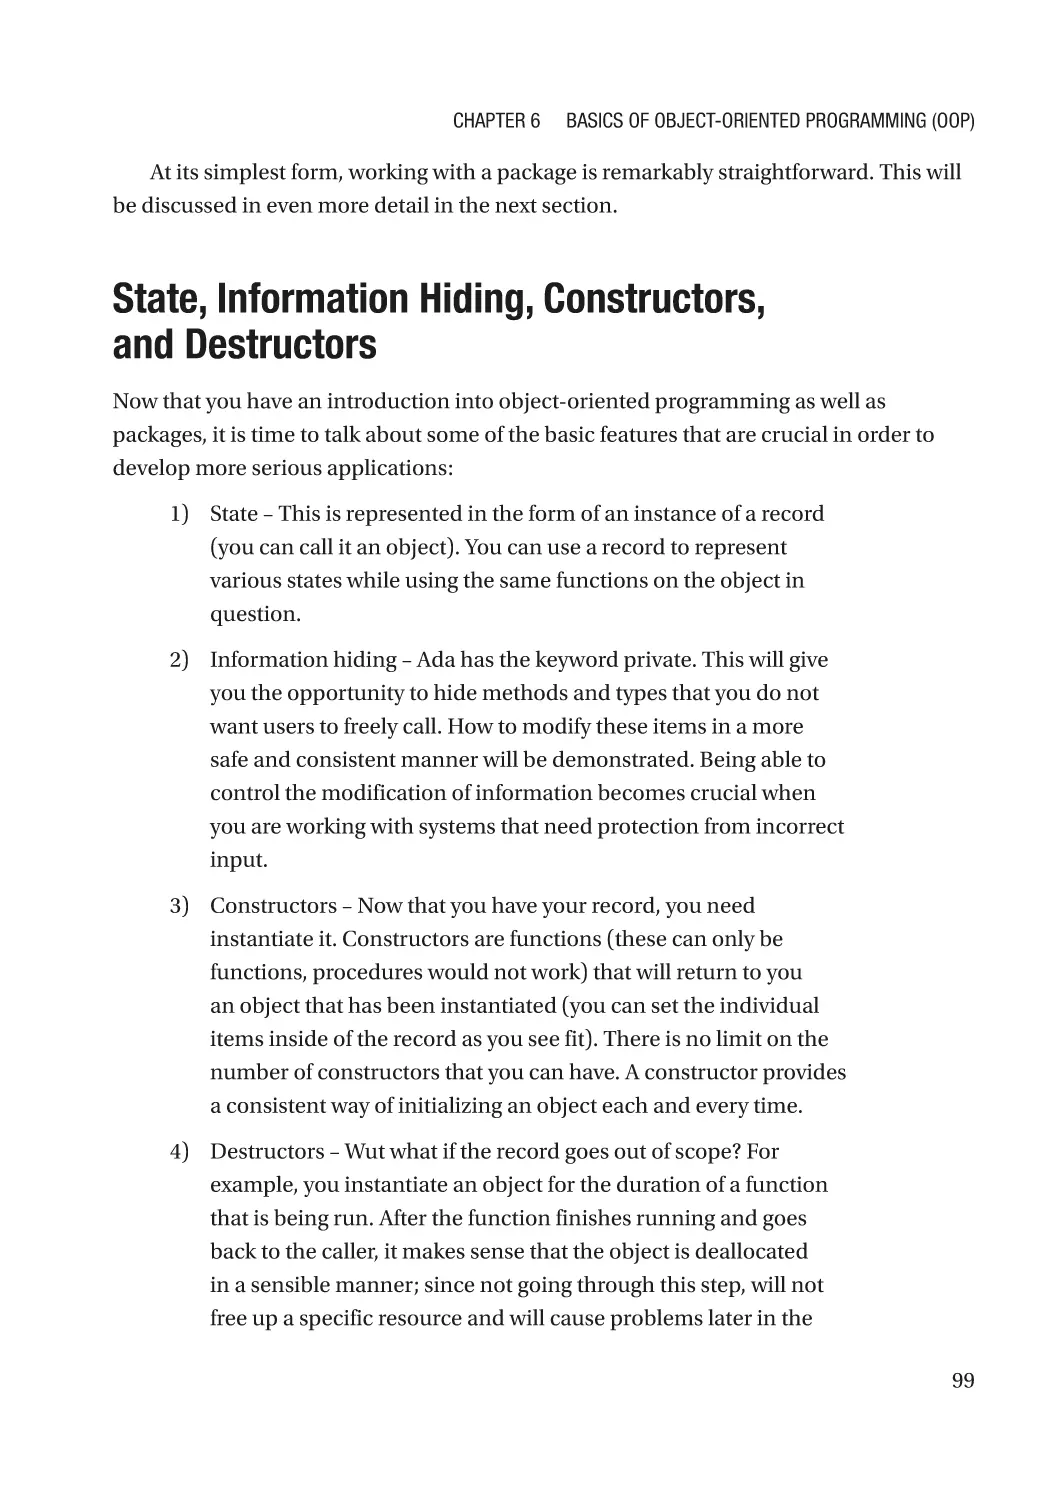 State, Information Hiding, Constructors, and Destructors